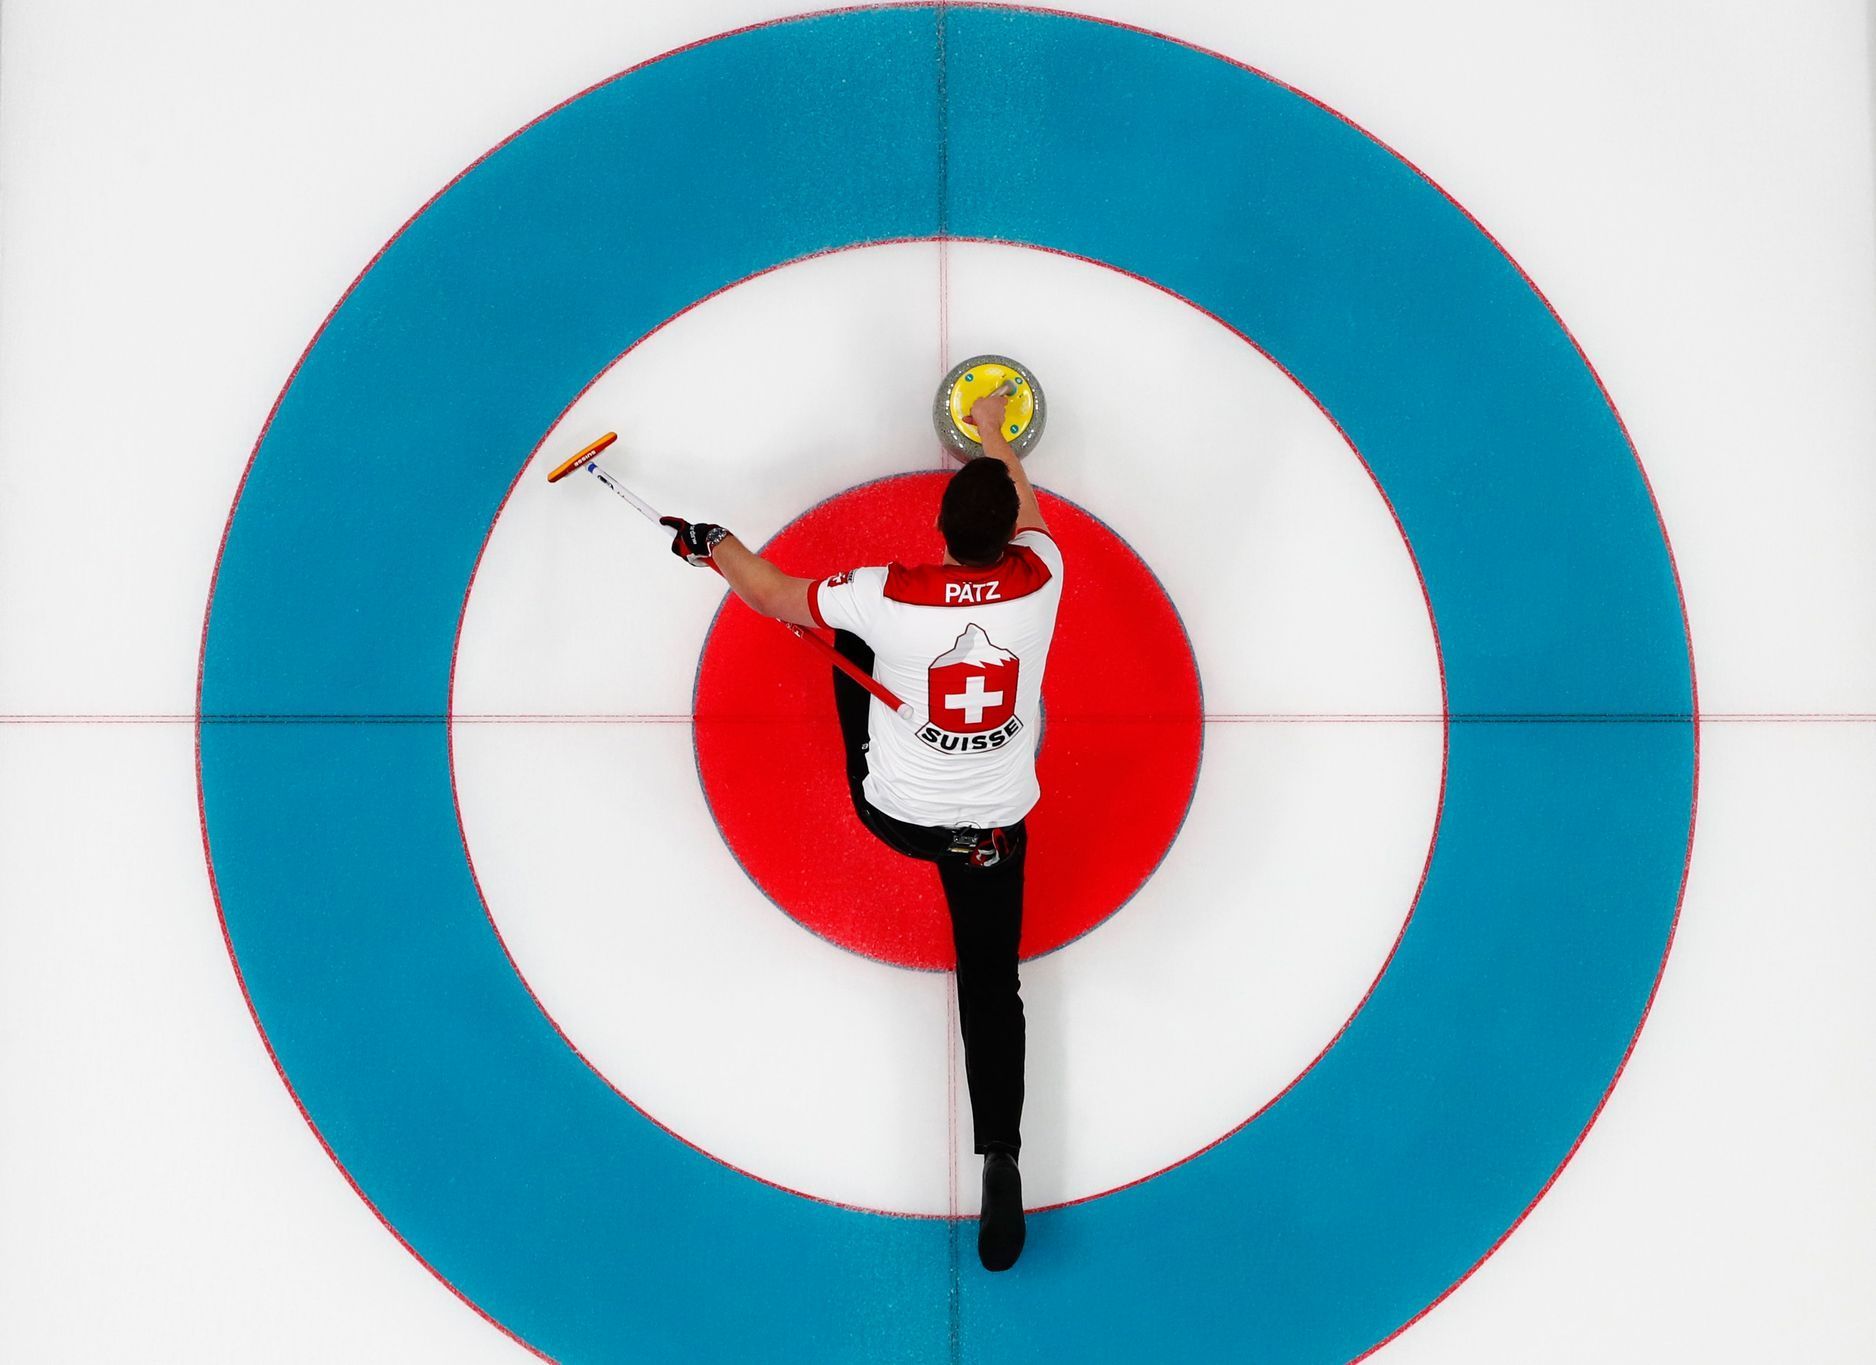 Curling mužů na ZOH 2018 (Švýcar Claudio Patz)